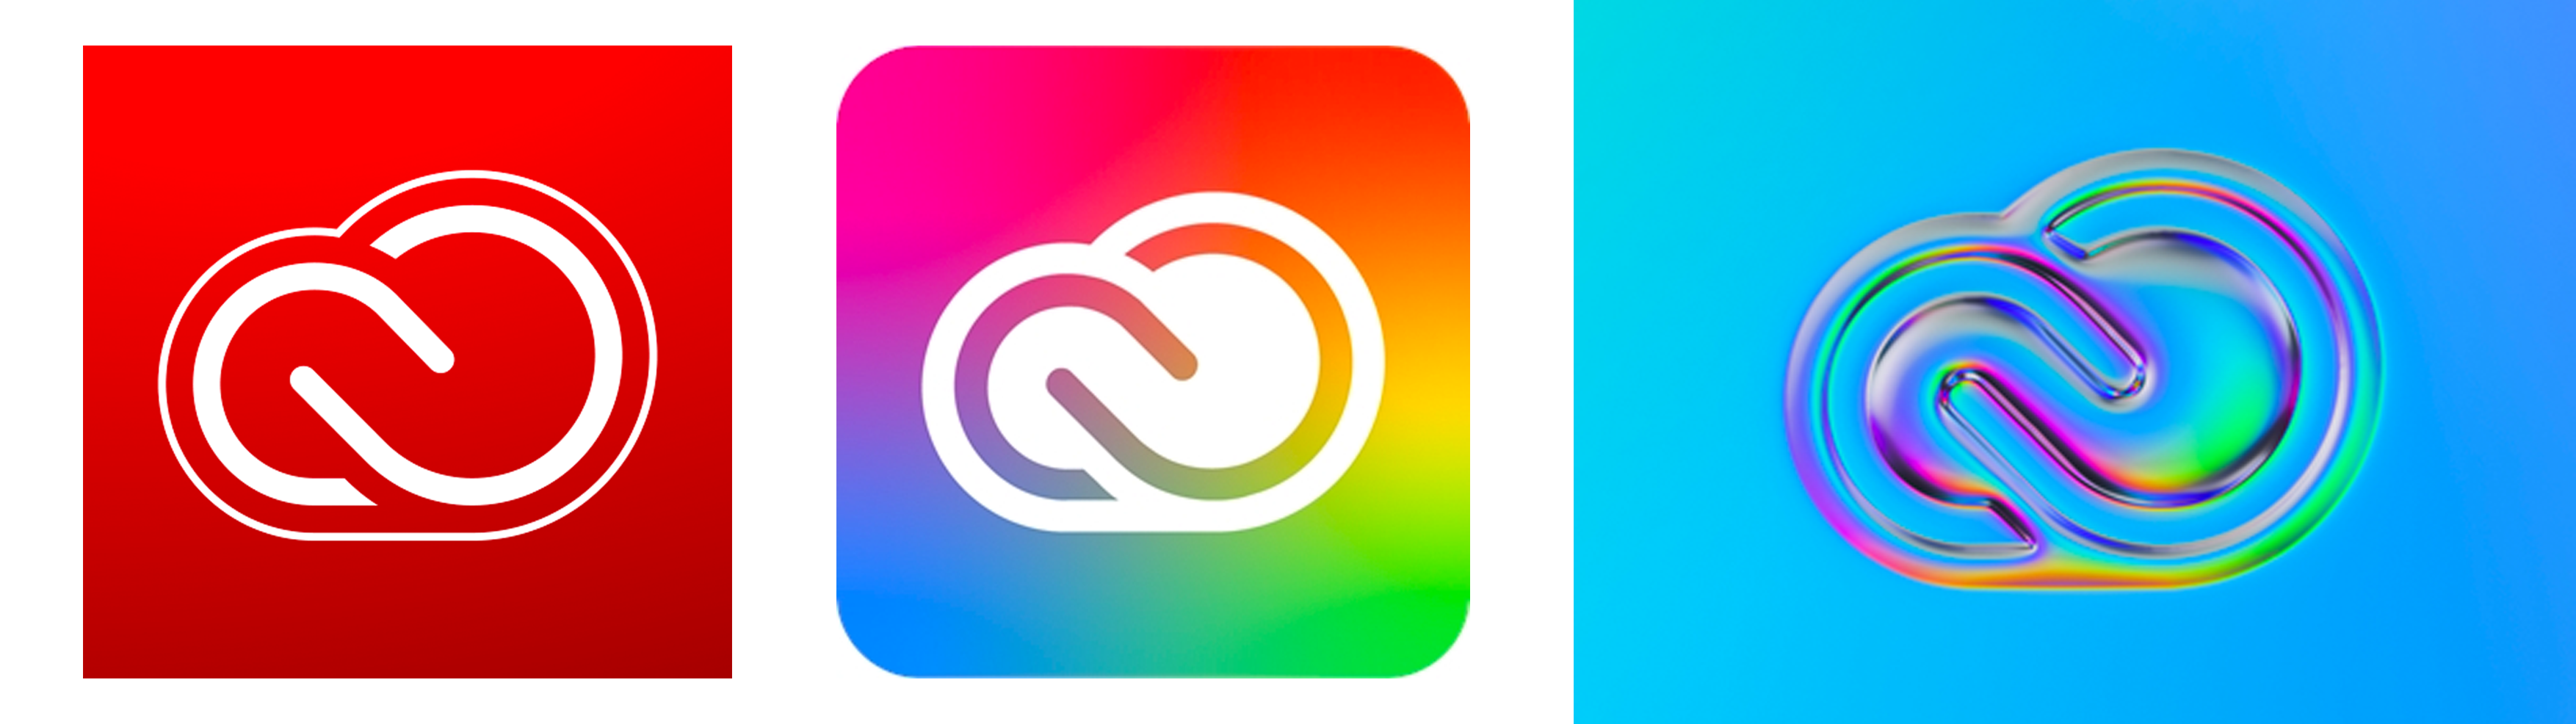 adobe creative cloud update development rebrand branding logo app 